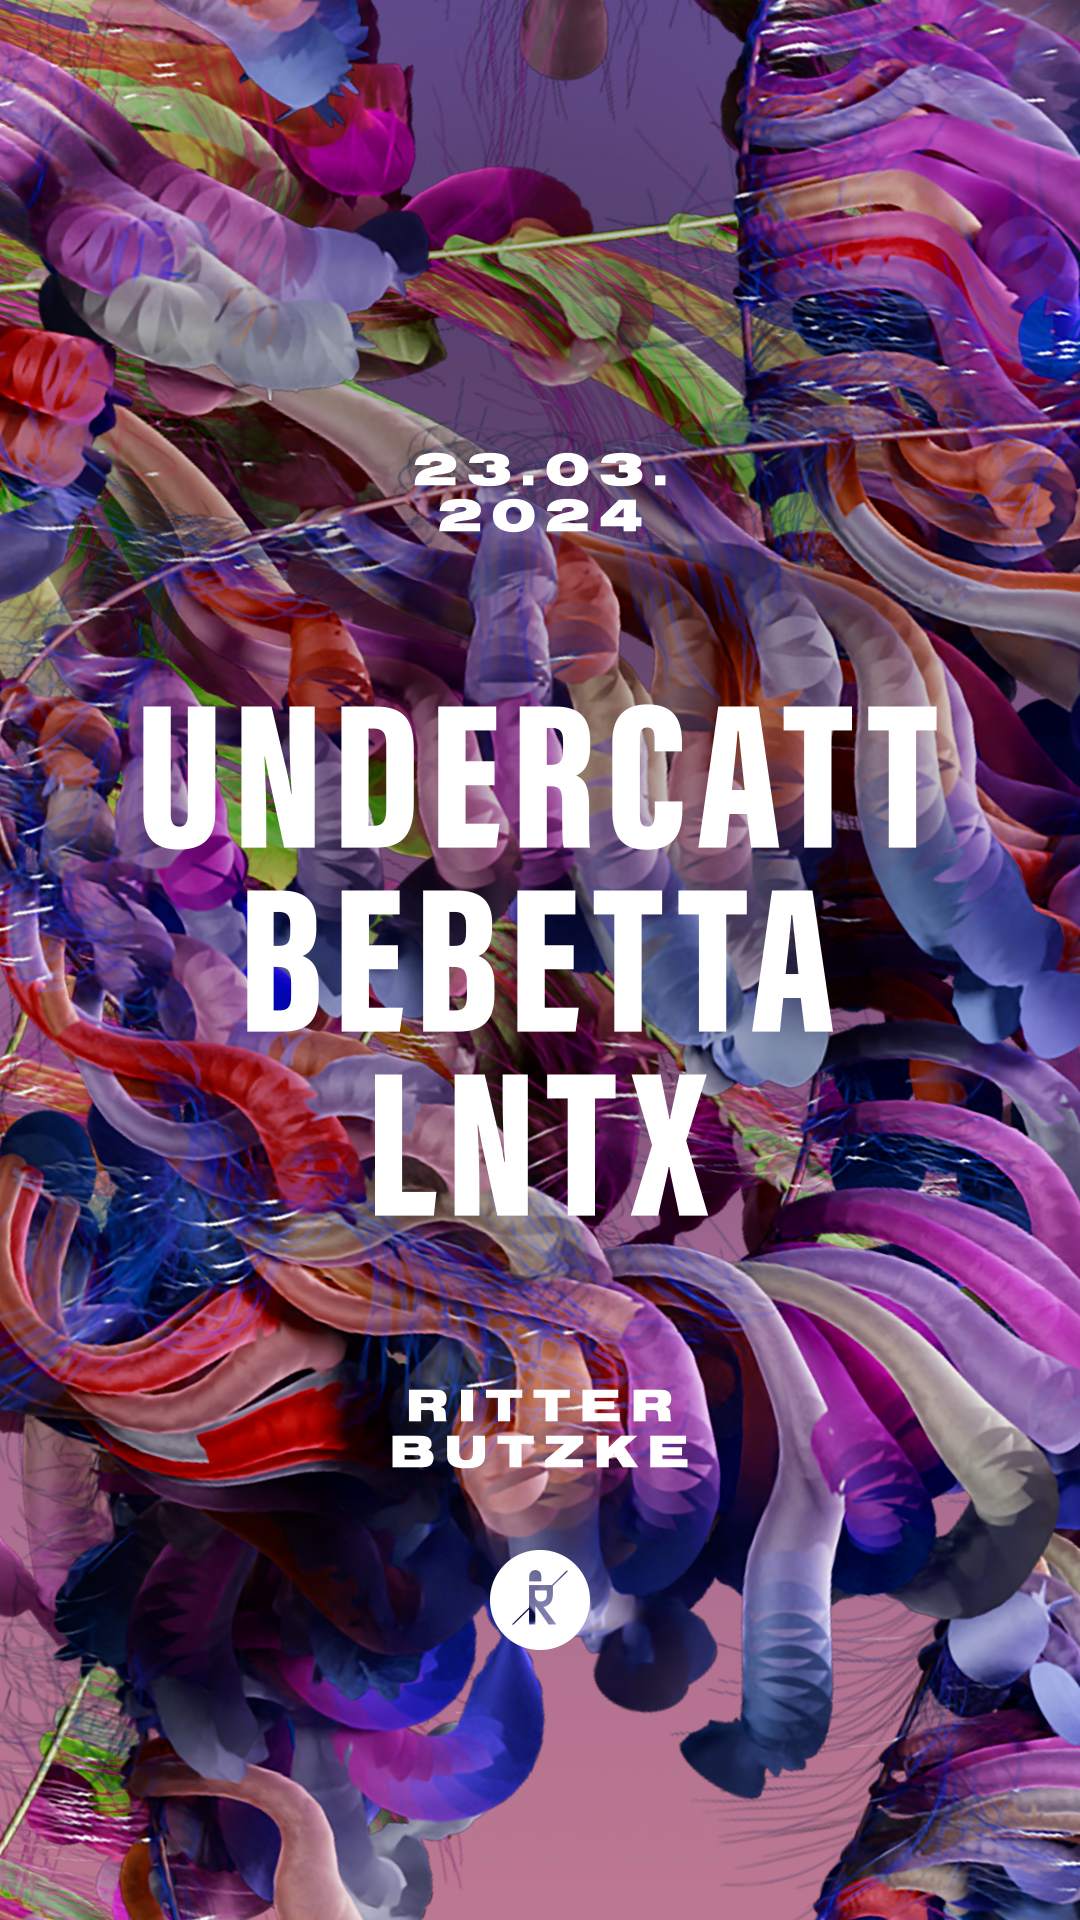 Undercatt & Bebetta - フライヤー裏